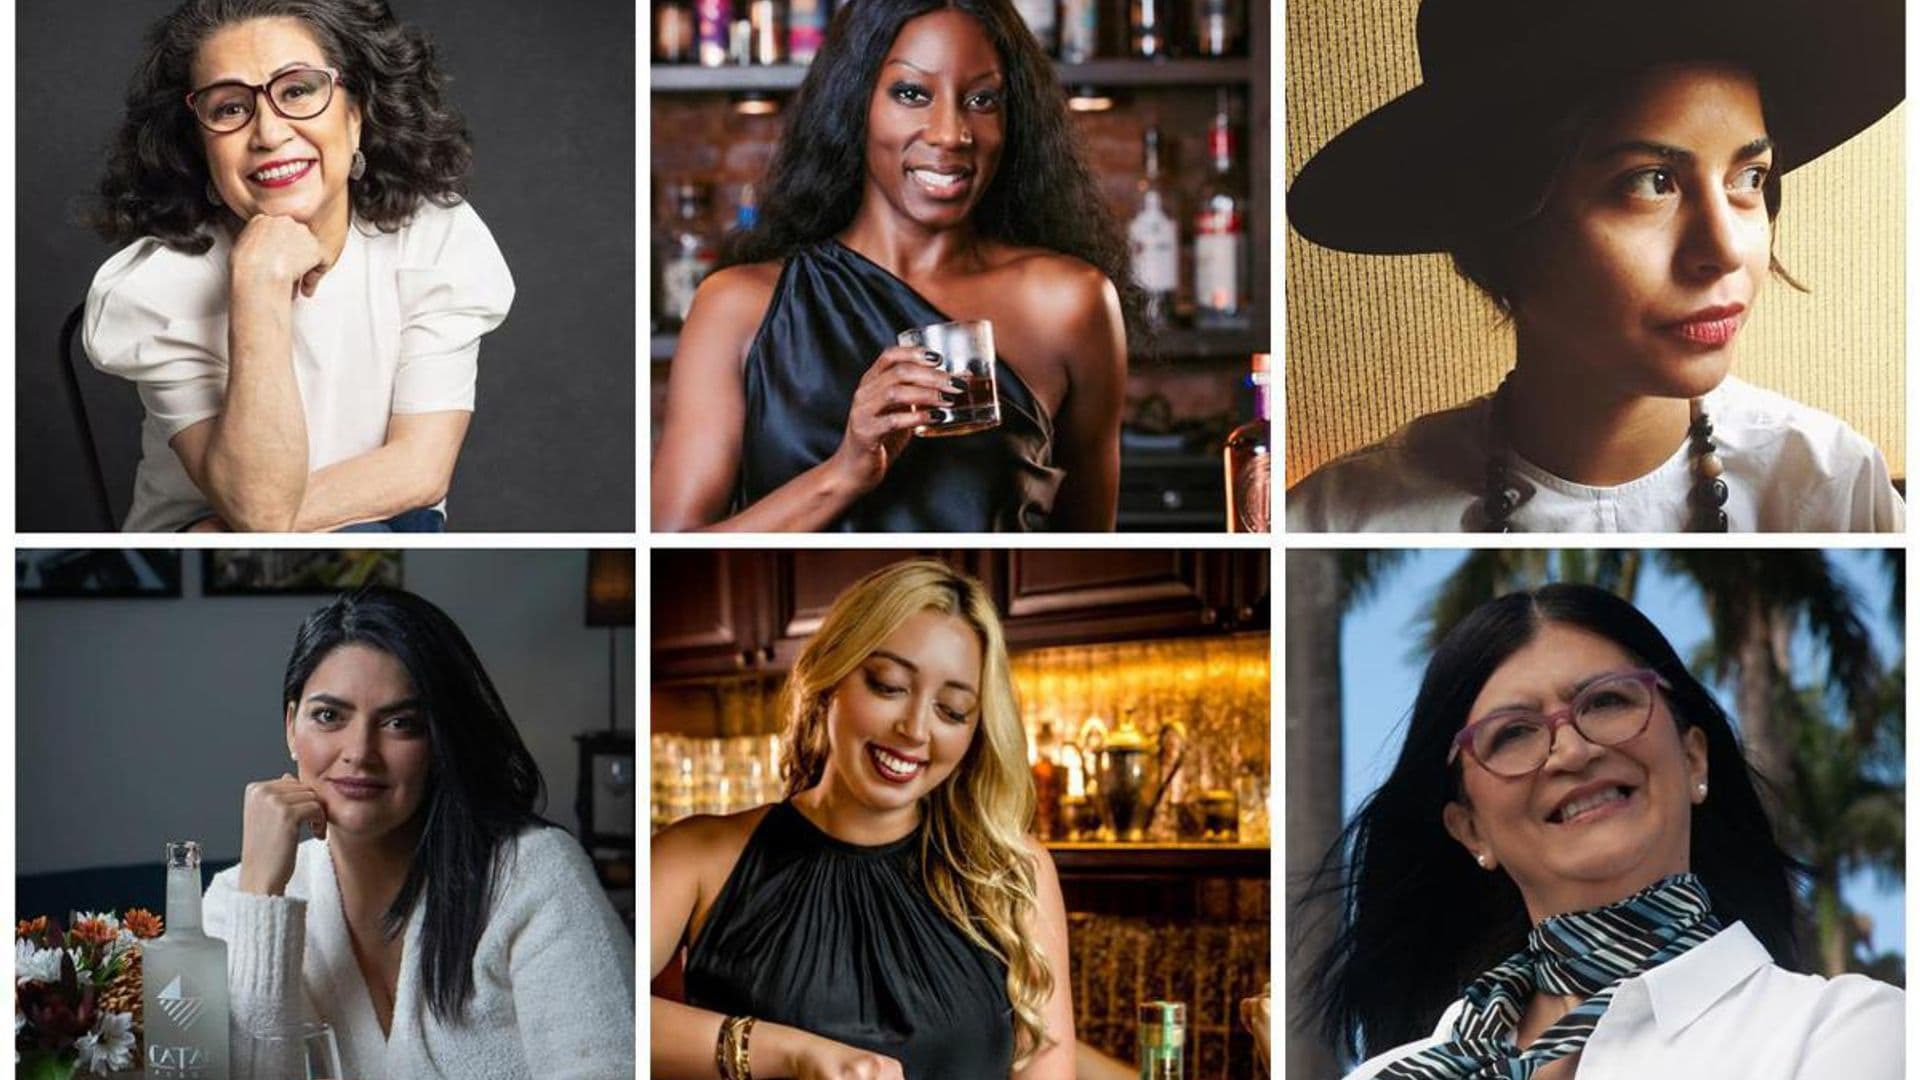 Meet six women making waves in the spirits industry